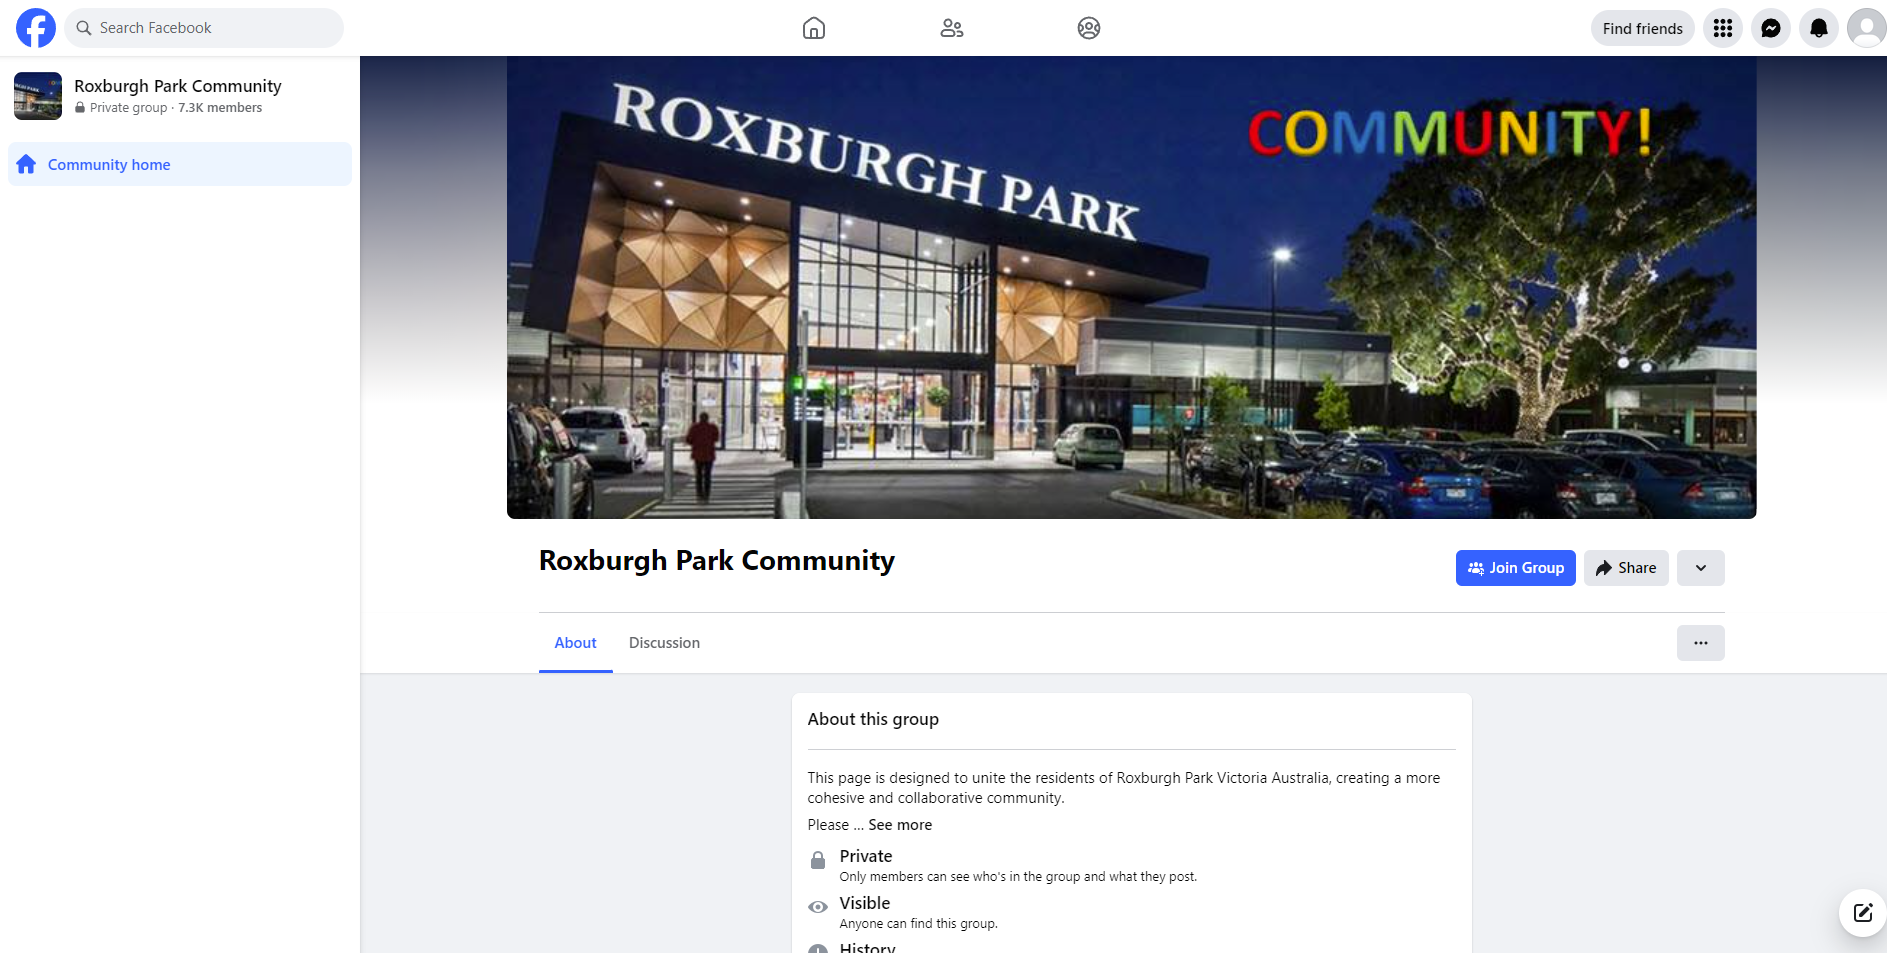 Roxburgh Park Community